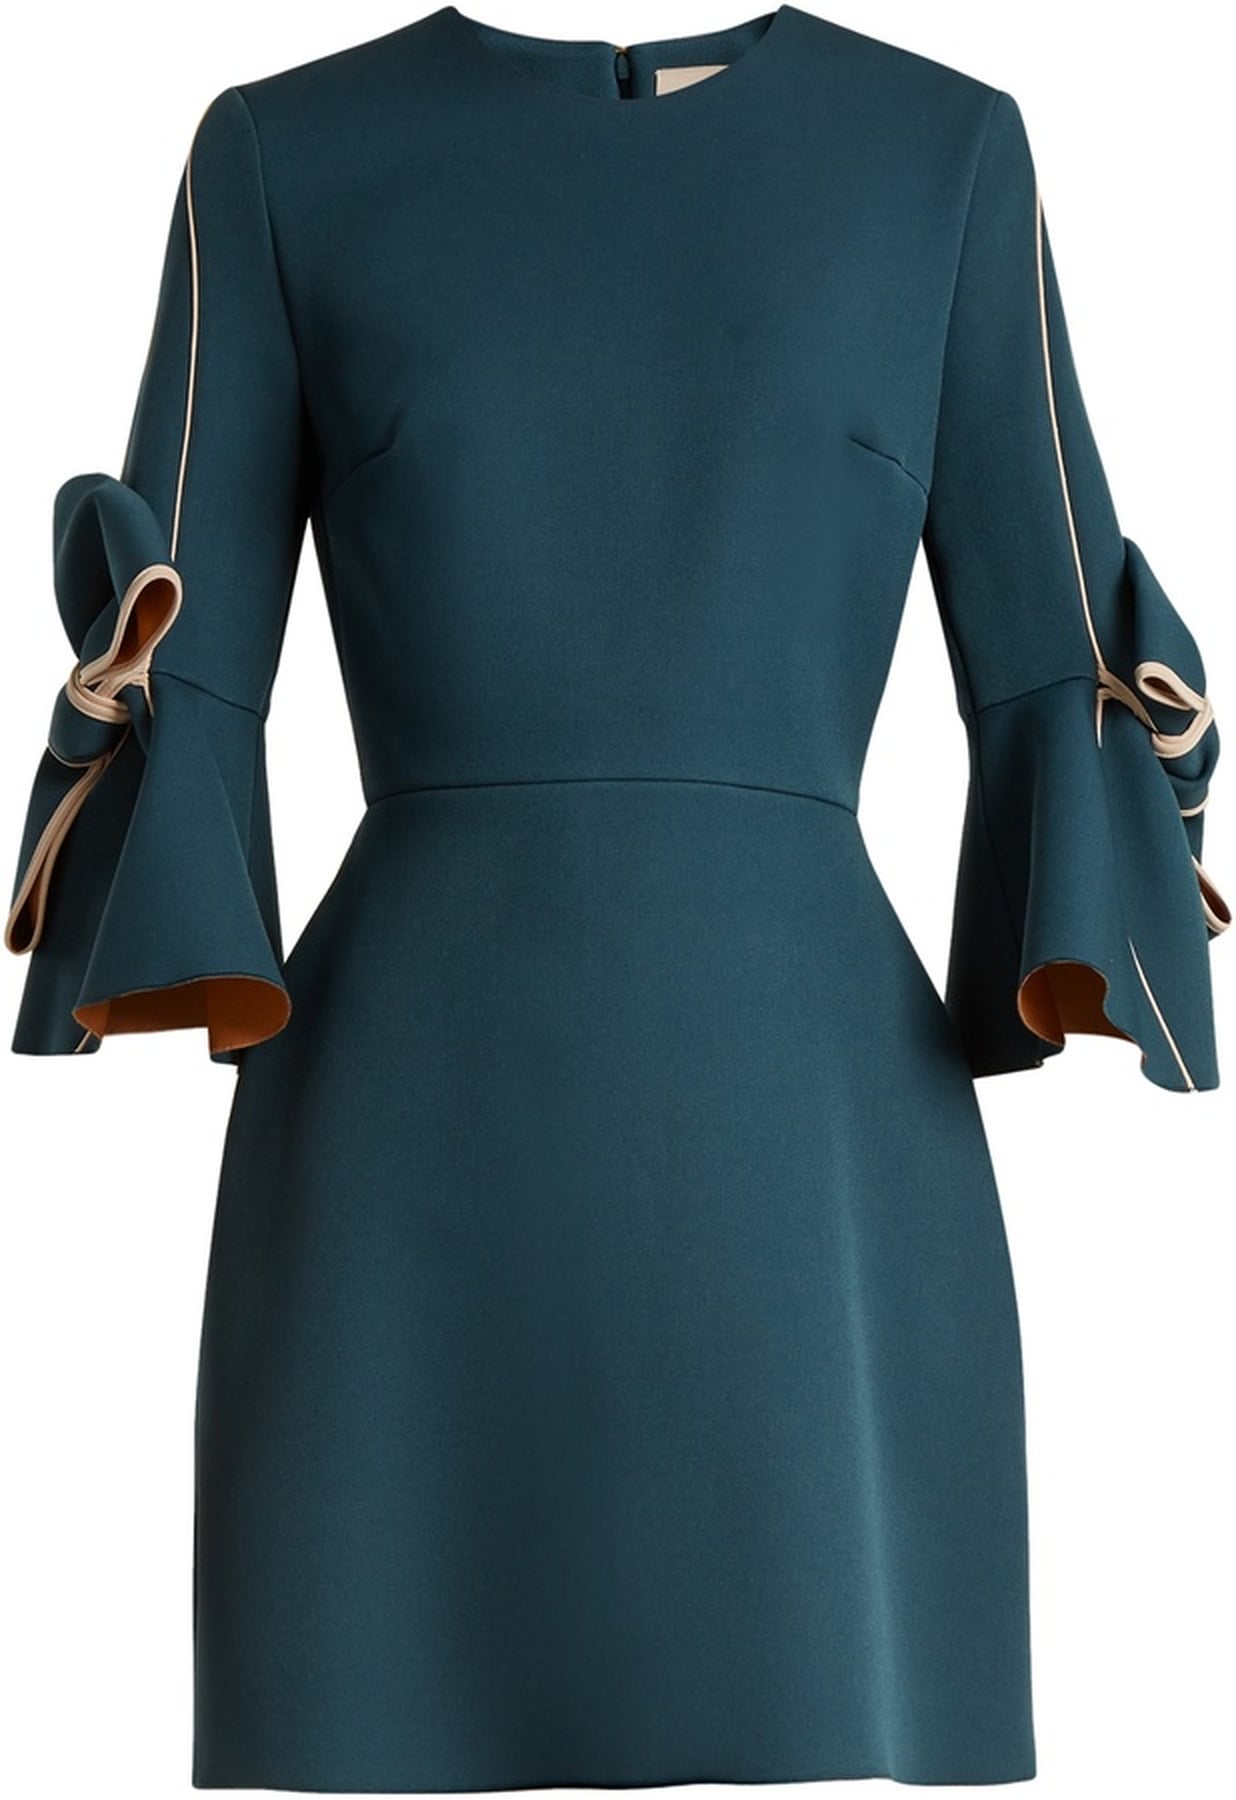 Meghan Markle's Green Dress For Engagement Interview | POPSUGAR Fashion